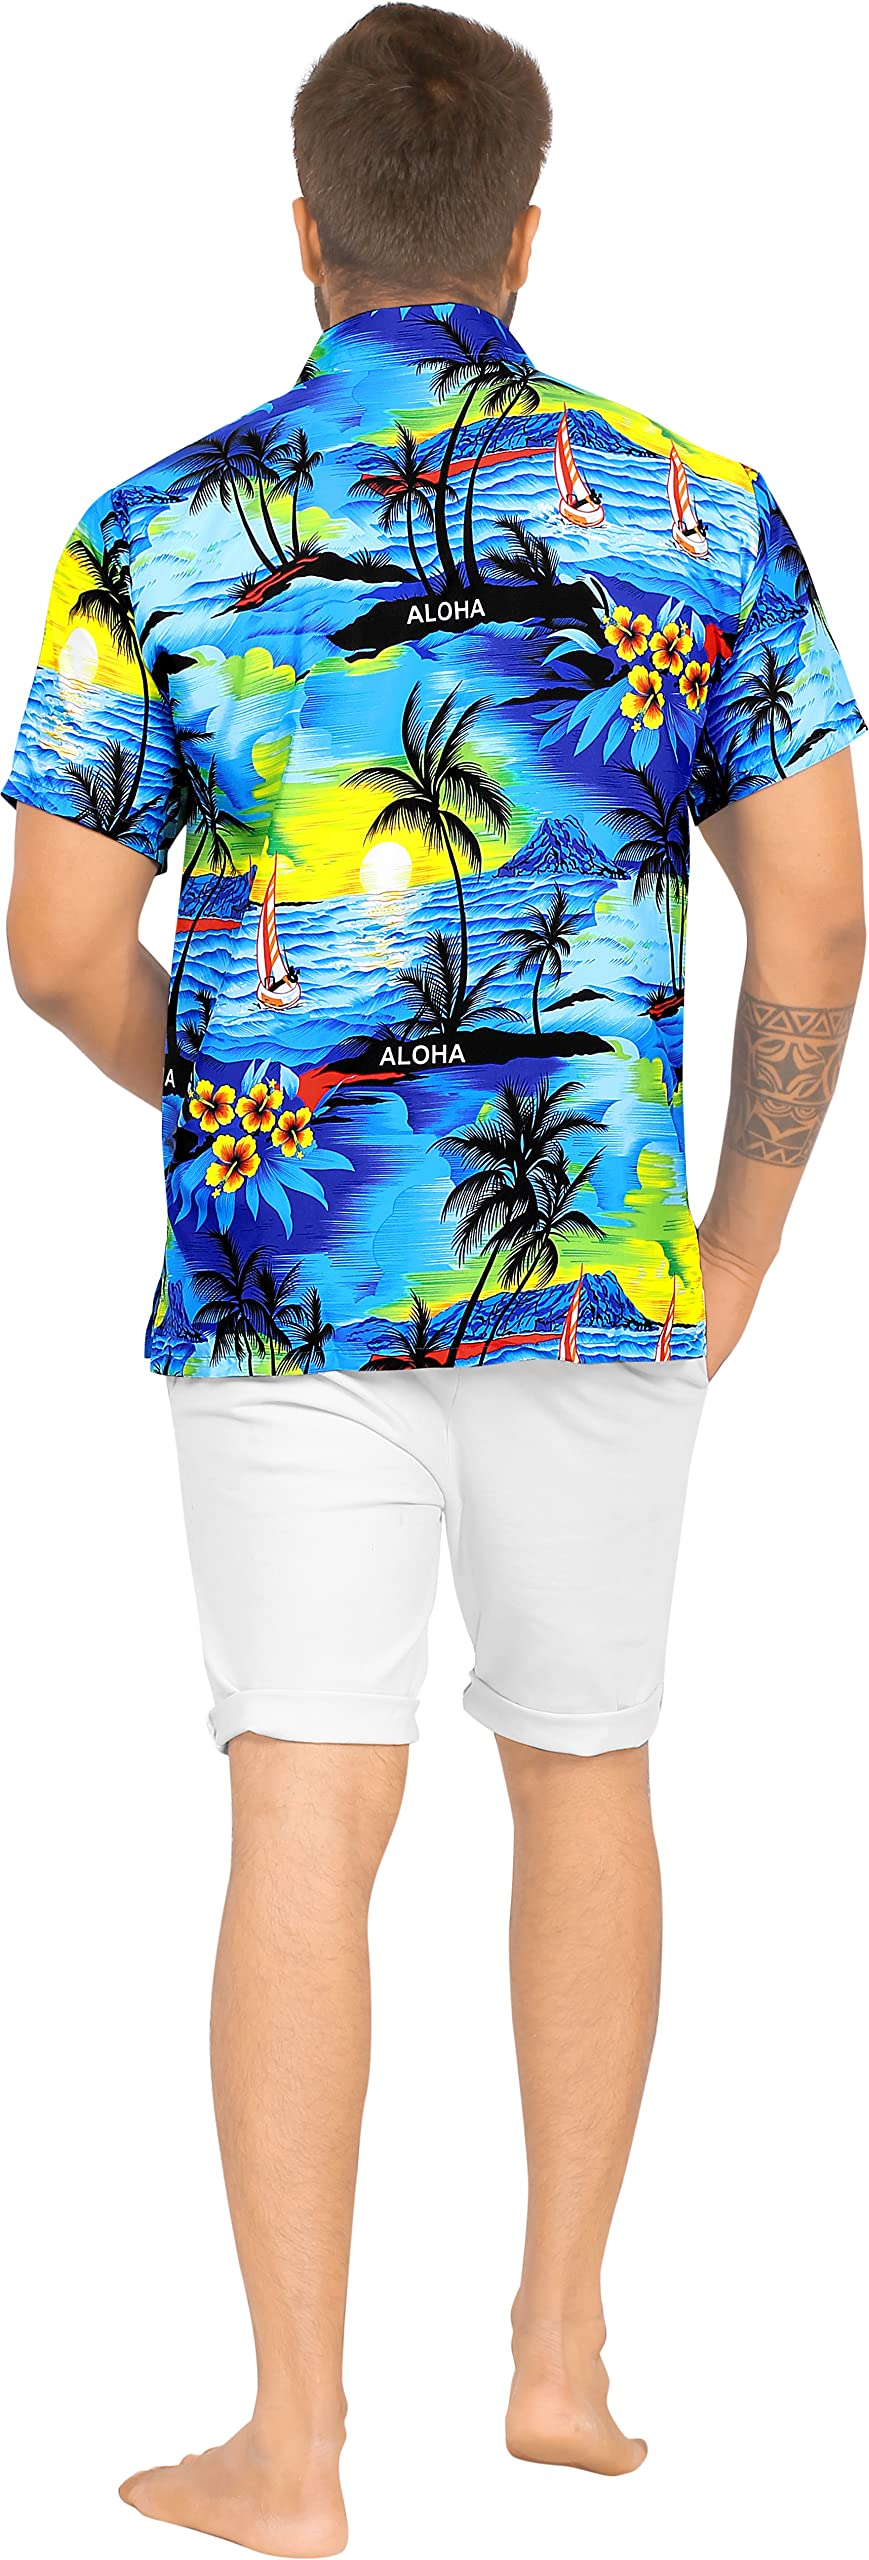 LA LEELA Men's Hawaiian Shirt Button Down Short Sleeve Caribbean Skull Pirate Shirts for Men